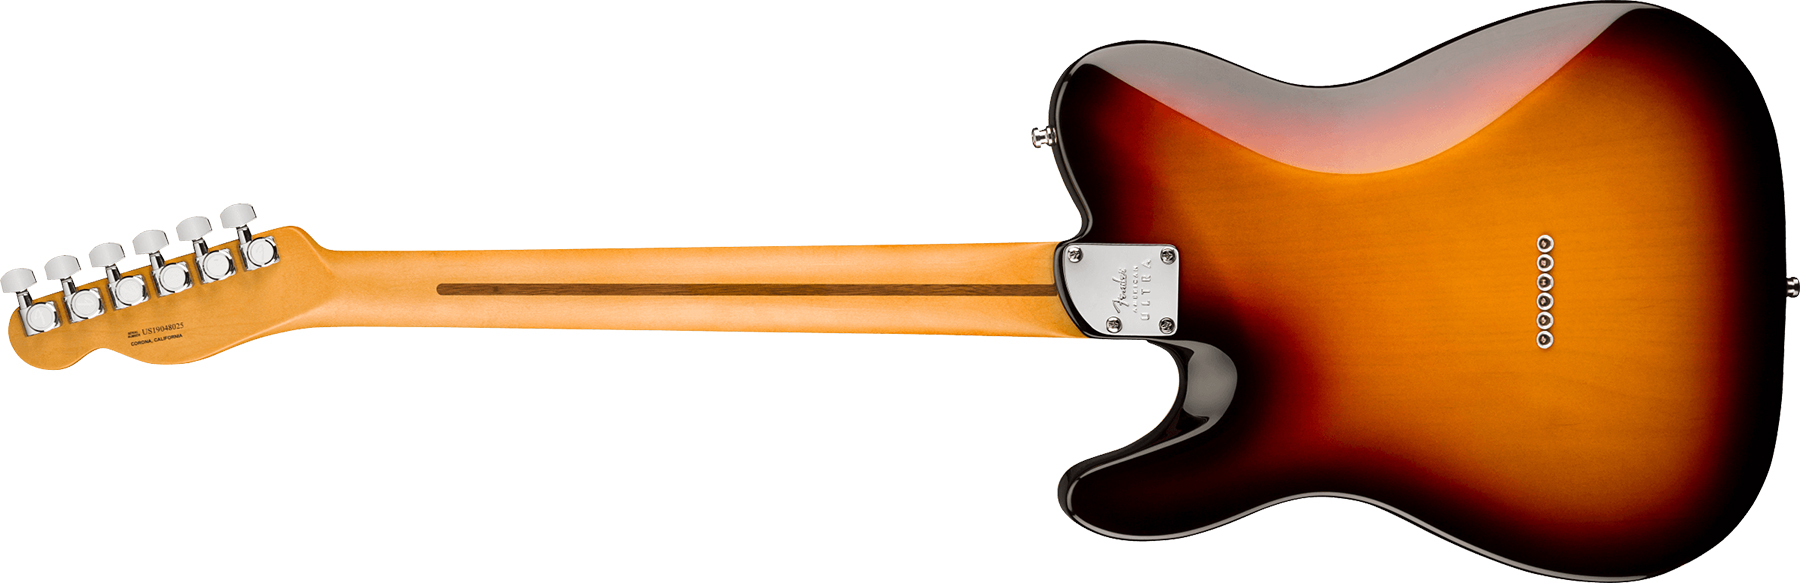 Fender Tele American Ultra 2019 Usa Rw - Ultraburst - Guitarra eléctrica con forma de tel - Variation 1